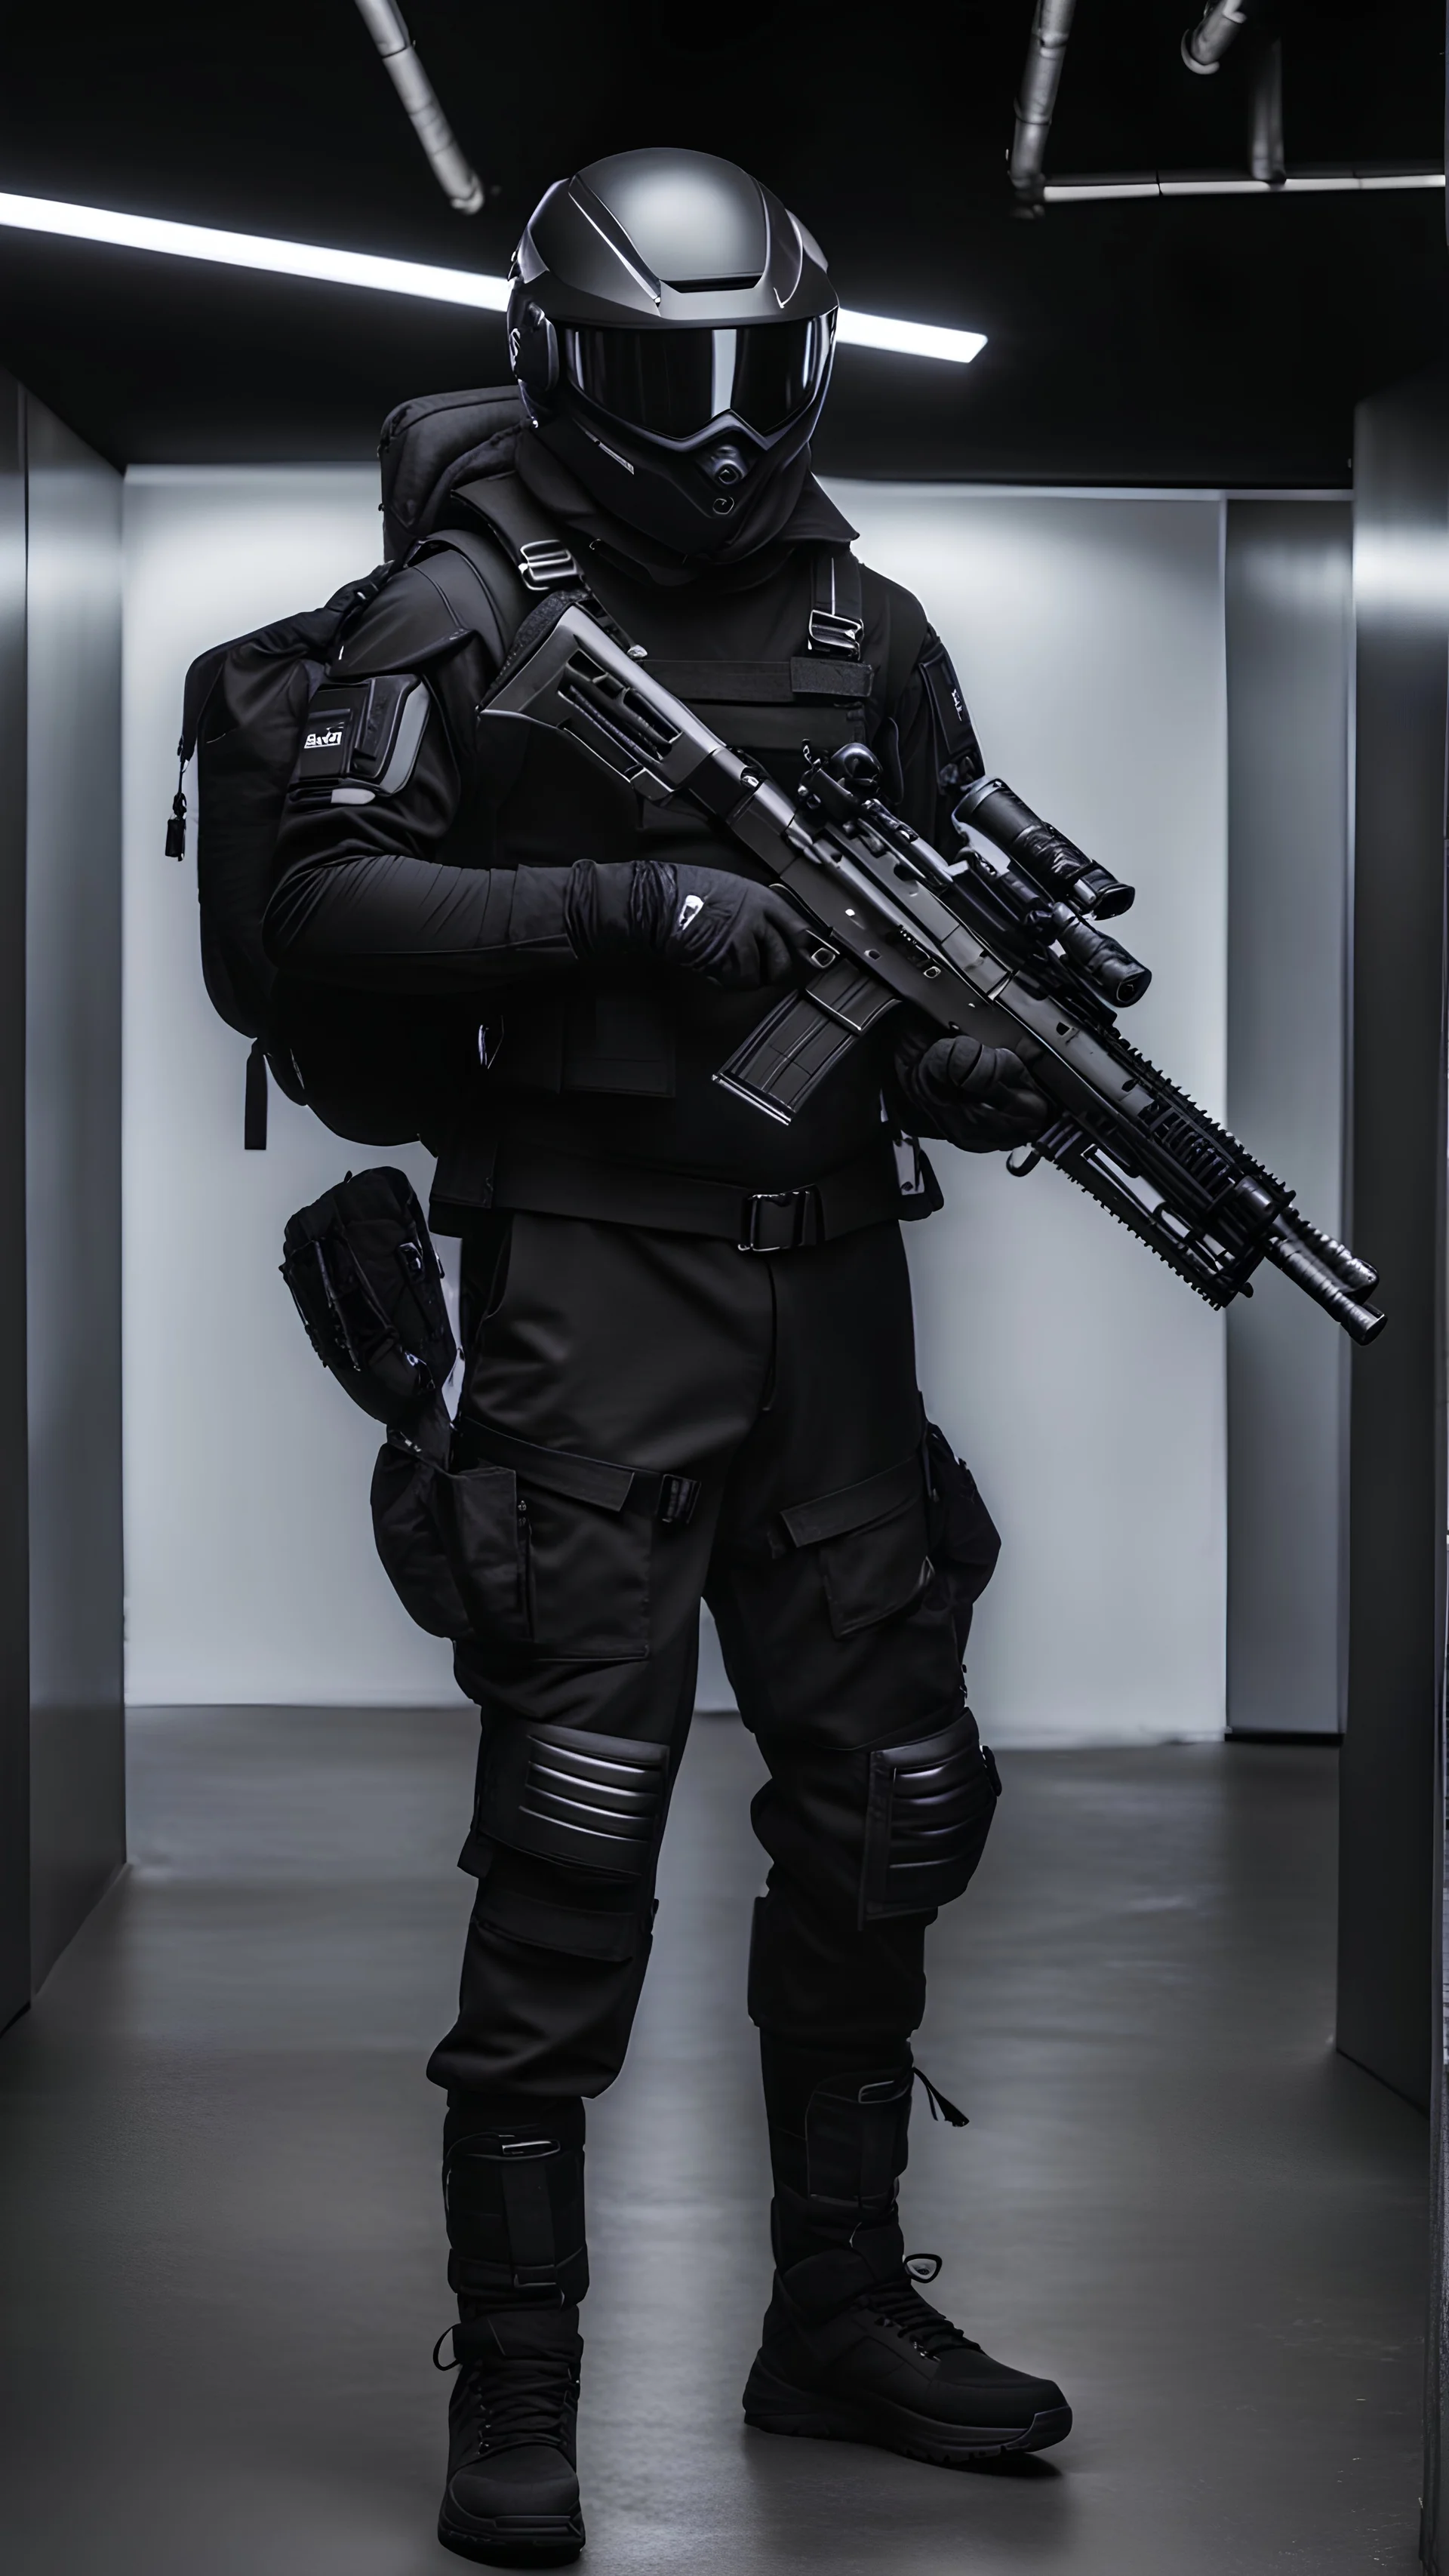 Futuristic soldier from saudi arabia wearing black tactical gear